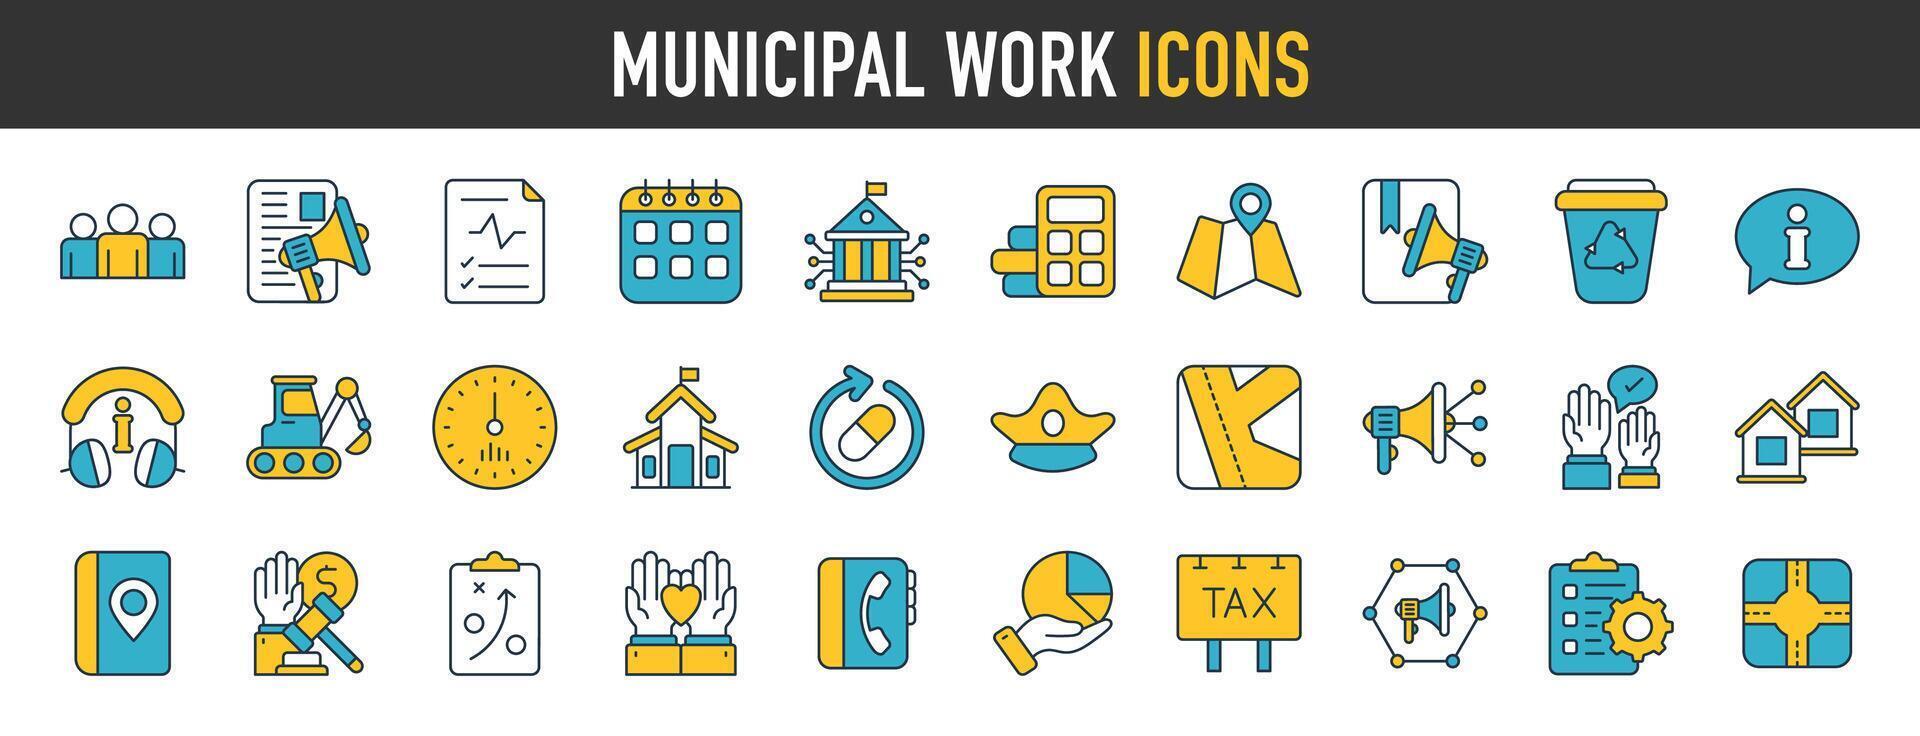 kommunal arbete ikoner vektor illustration.